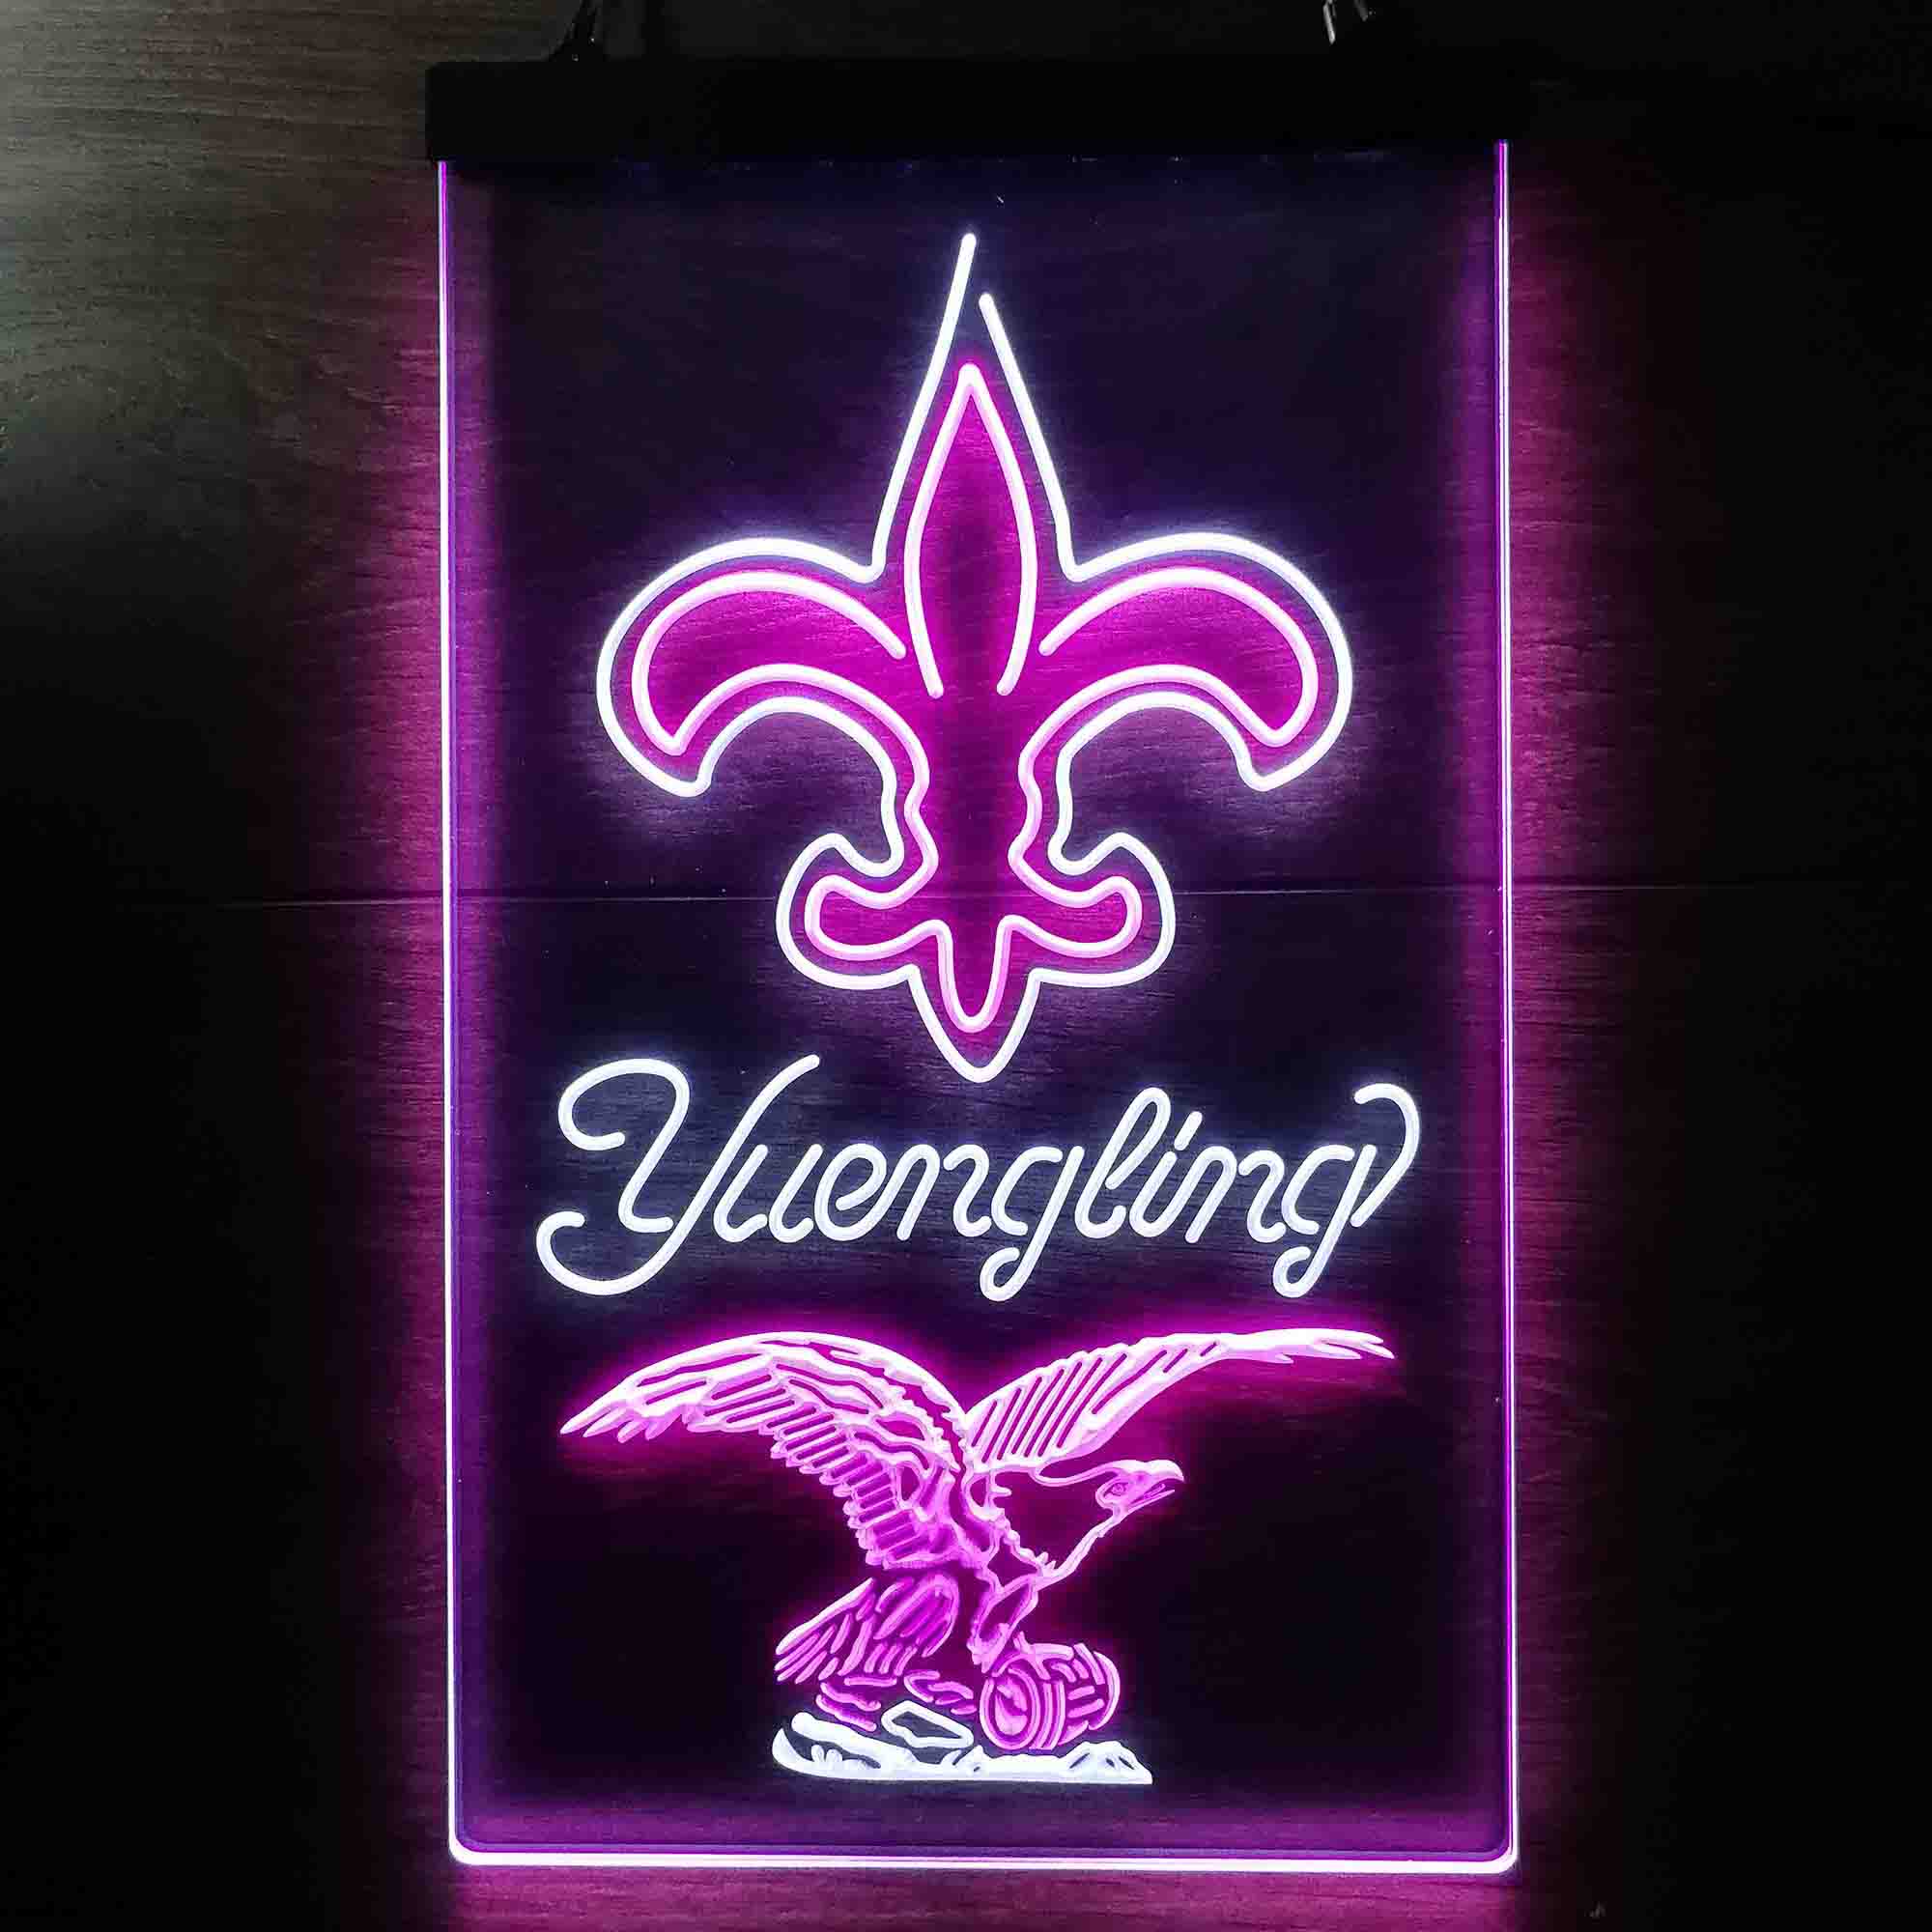 Yuengling Bar New Orleans Saints Est. 1967 LED Neon Sign